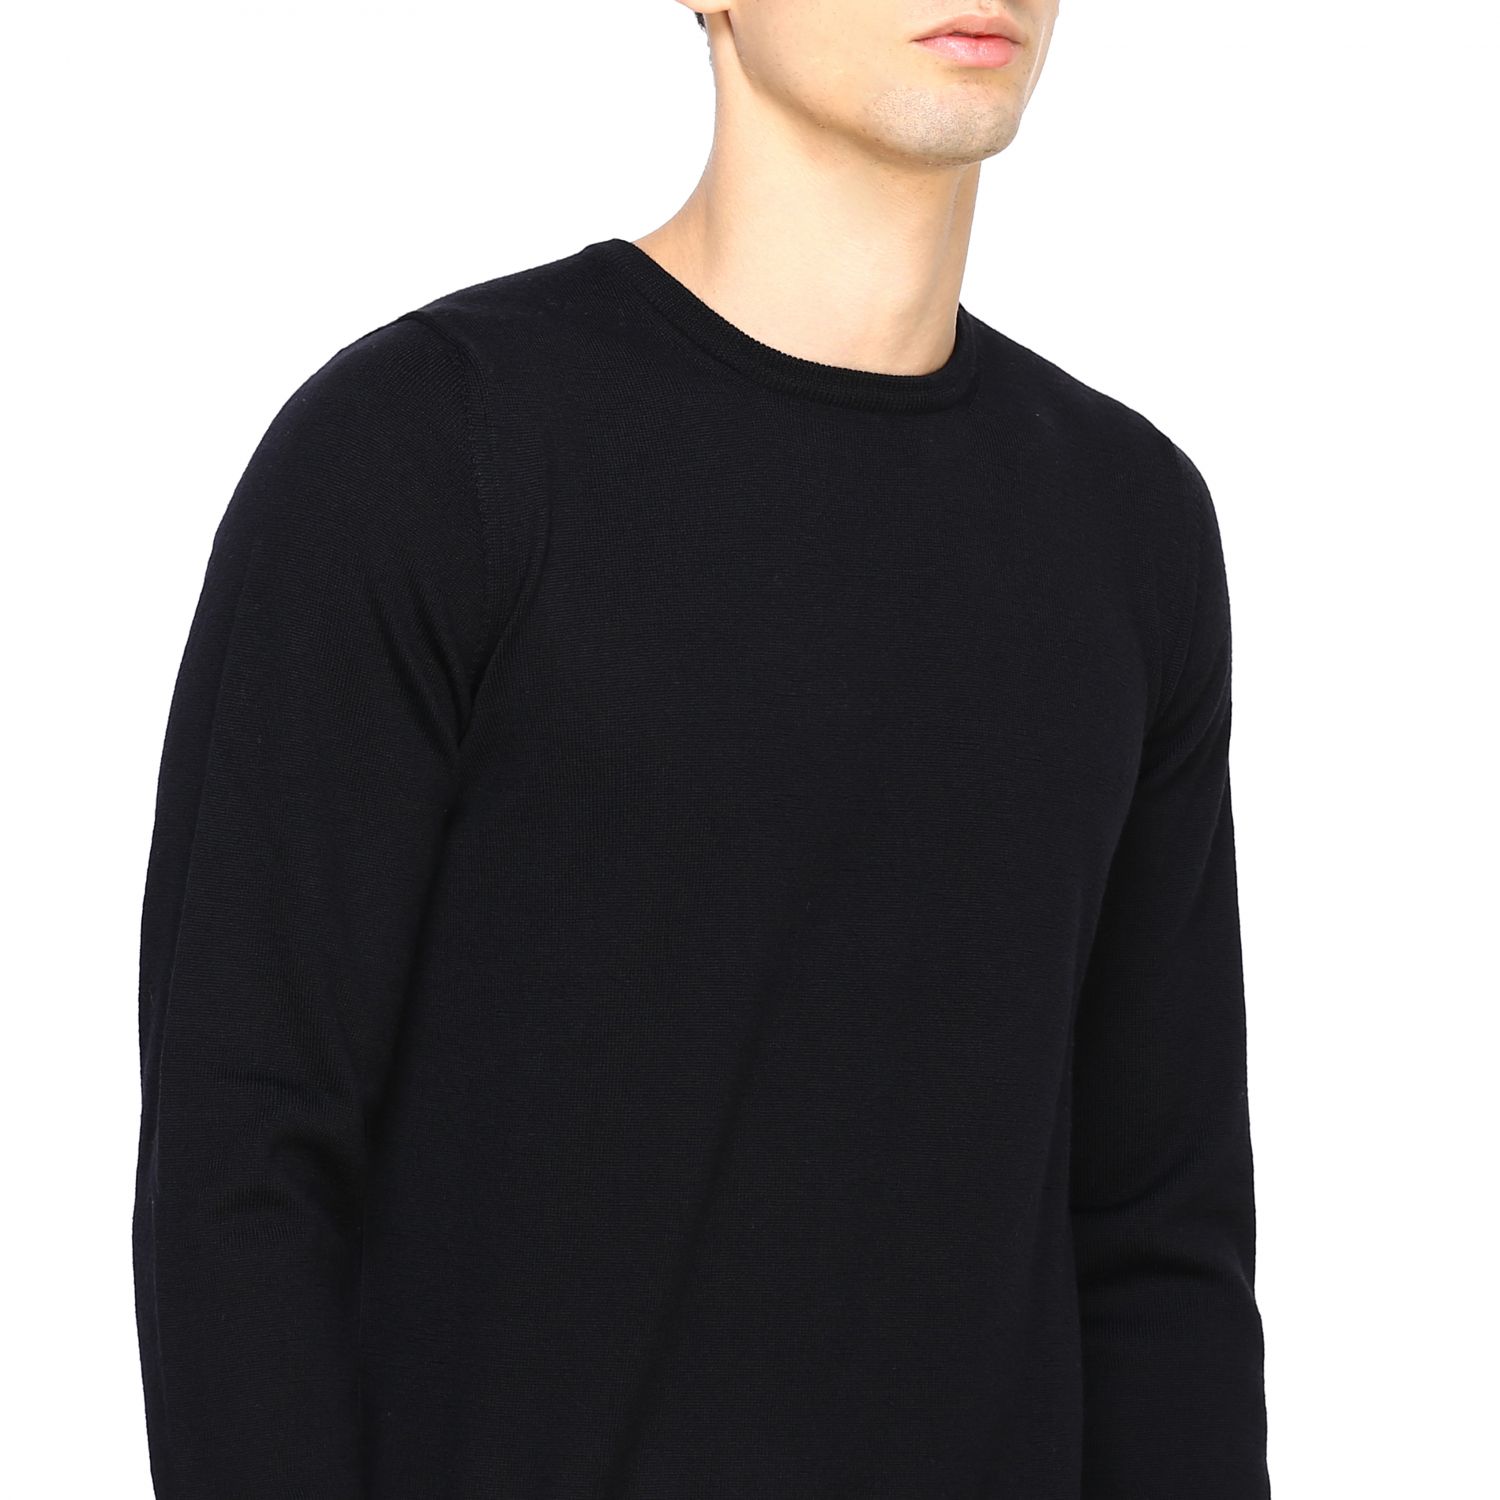 Gran Sasso Outlet: sweatshirt for man - Black | Gran Sasso sweatshirt ...